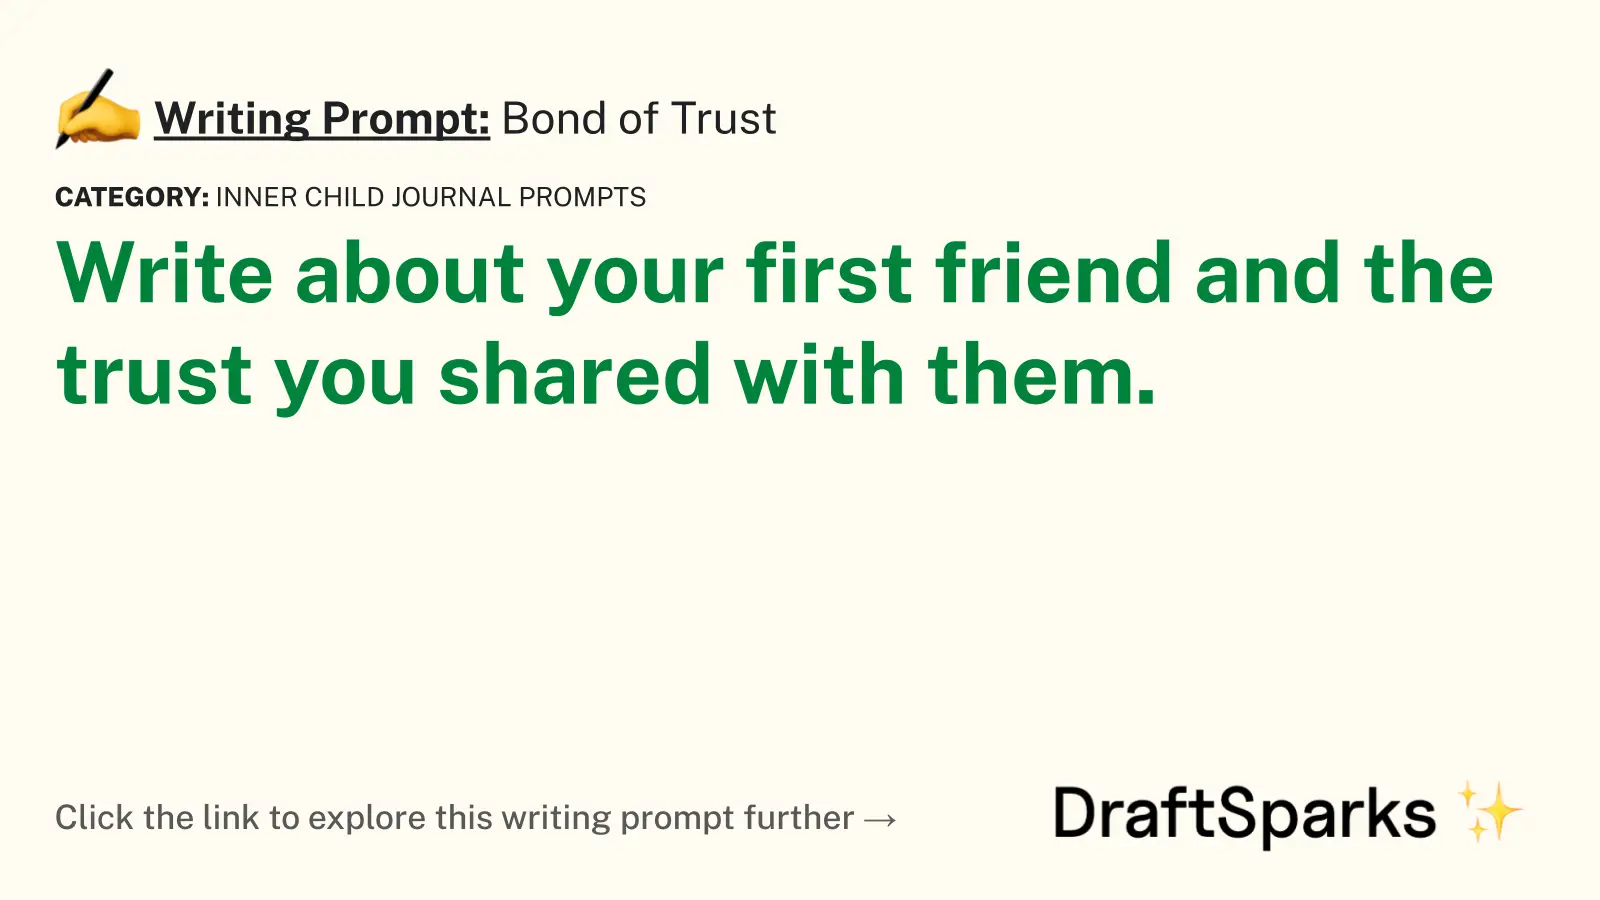 Bond of Trust